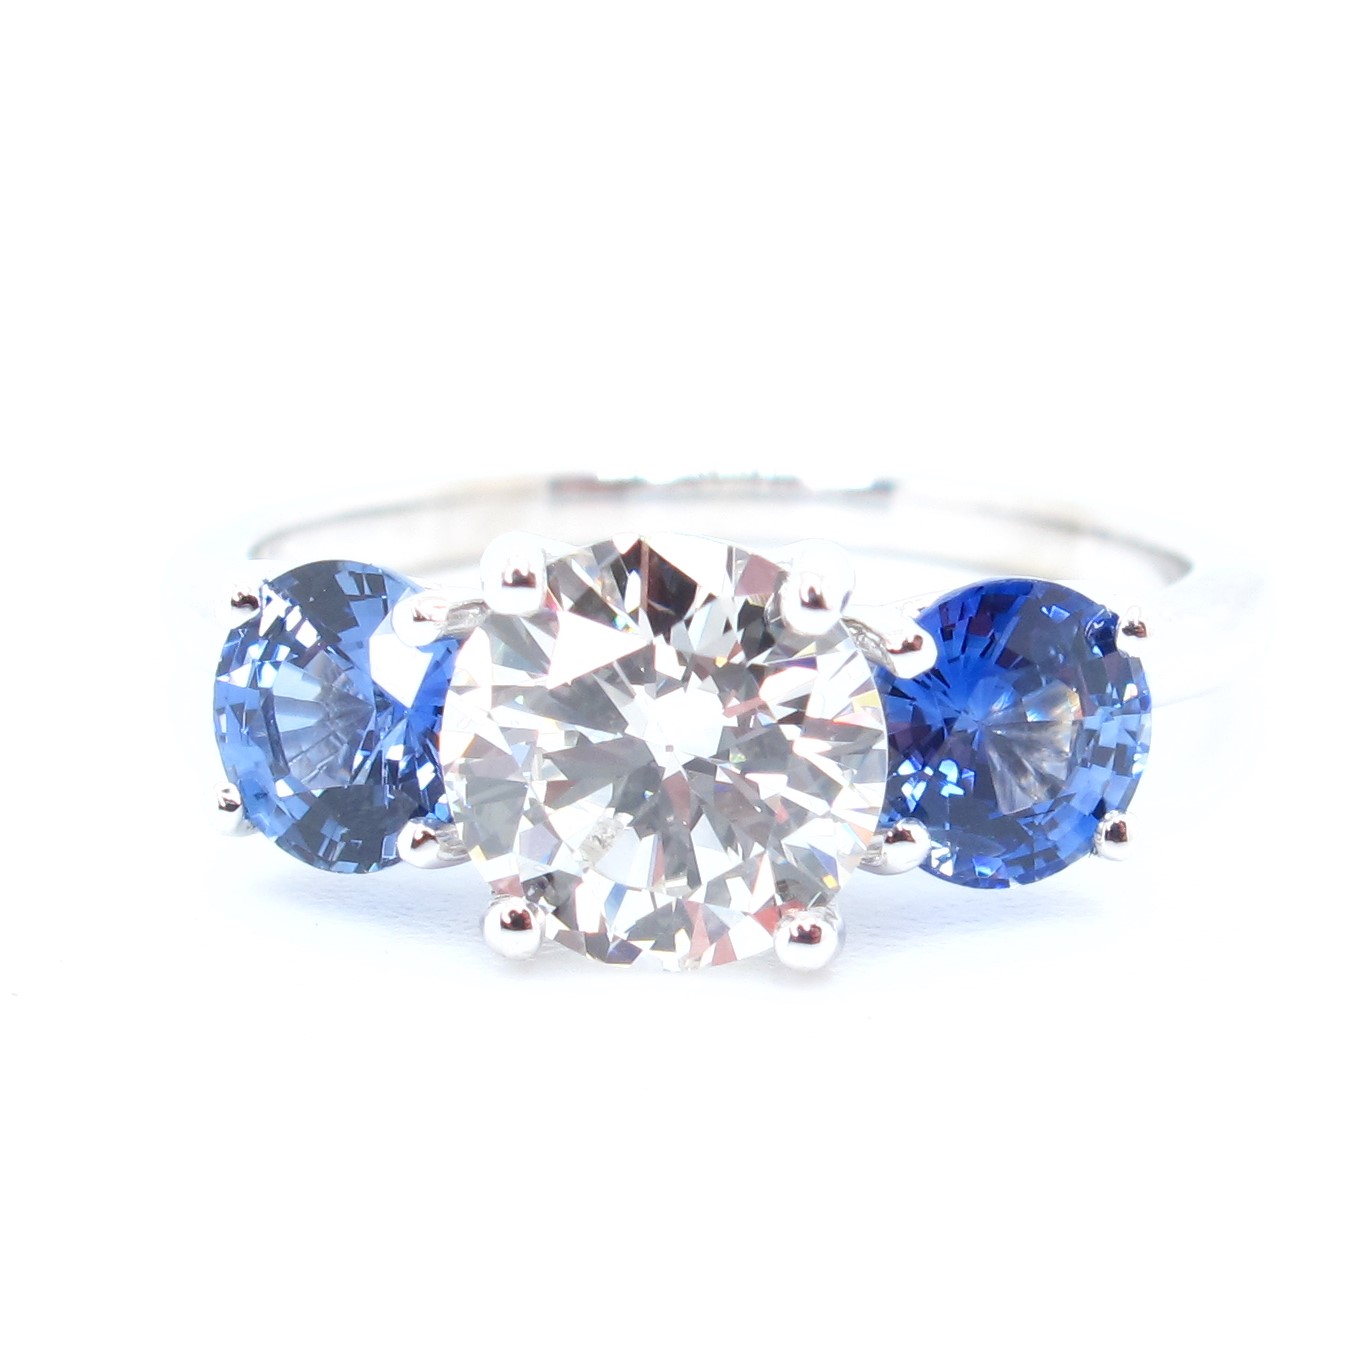 How Do You Buy Diamond Jewellery Online? | The Diamond Store